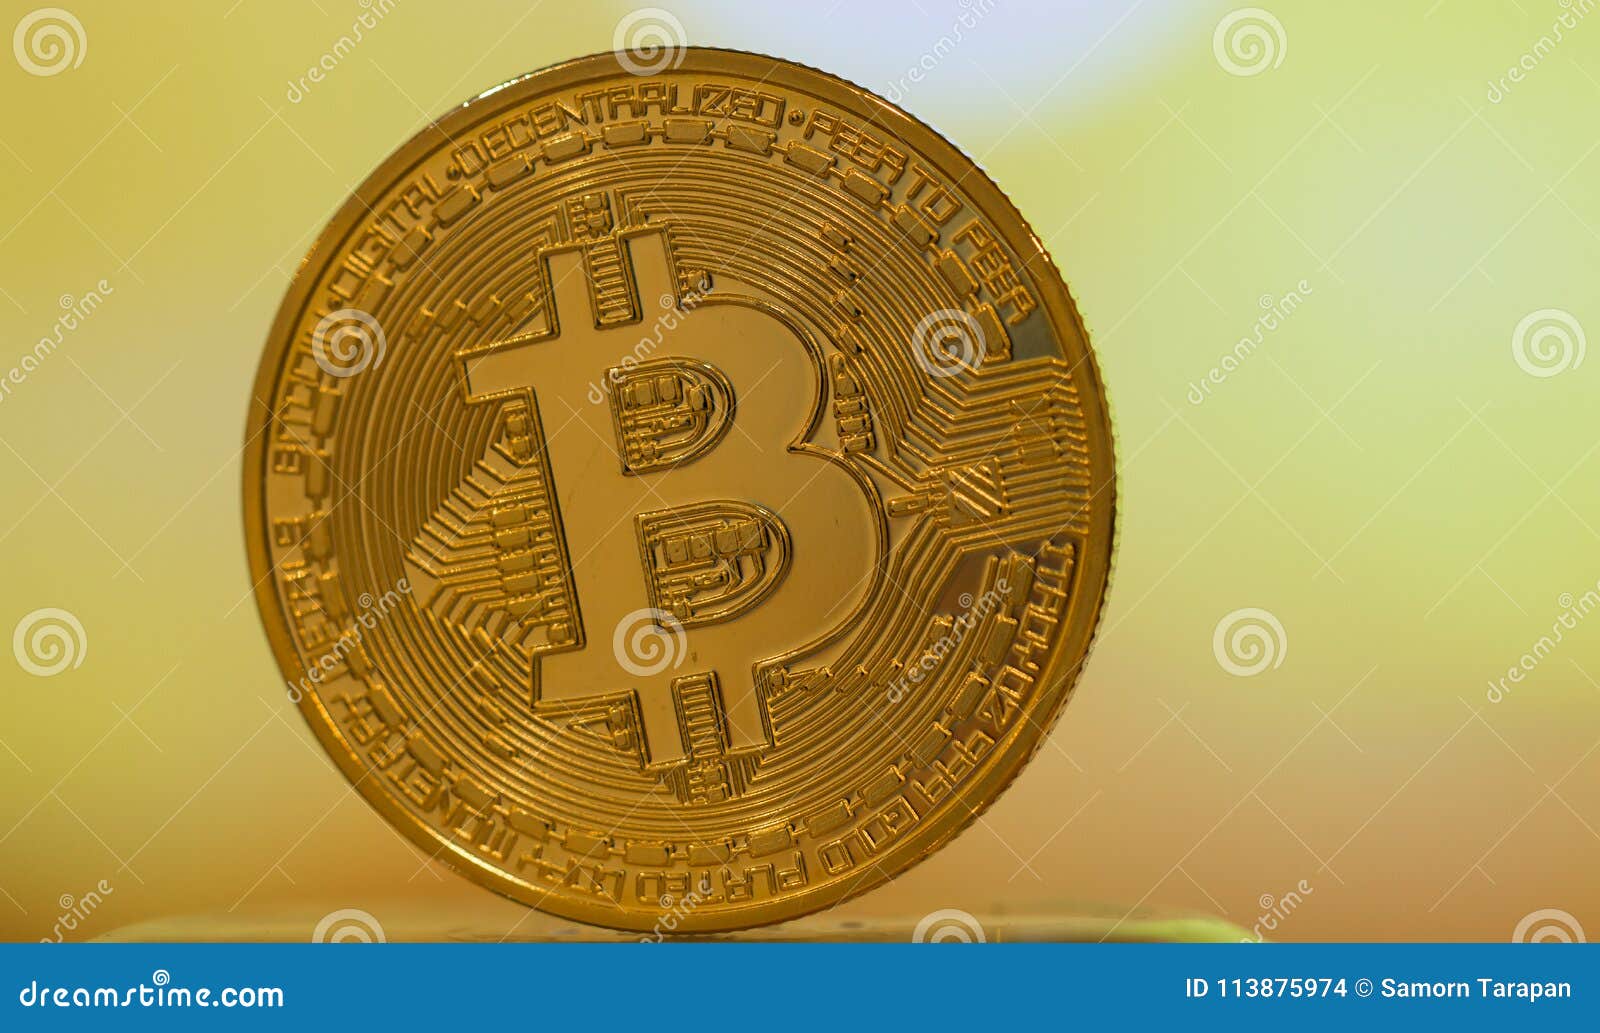 Bitcoin Digital Currency Or Virtual Money Bitcoin Is Digital Cur - 